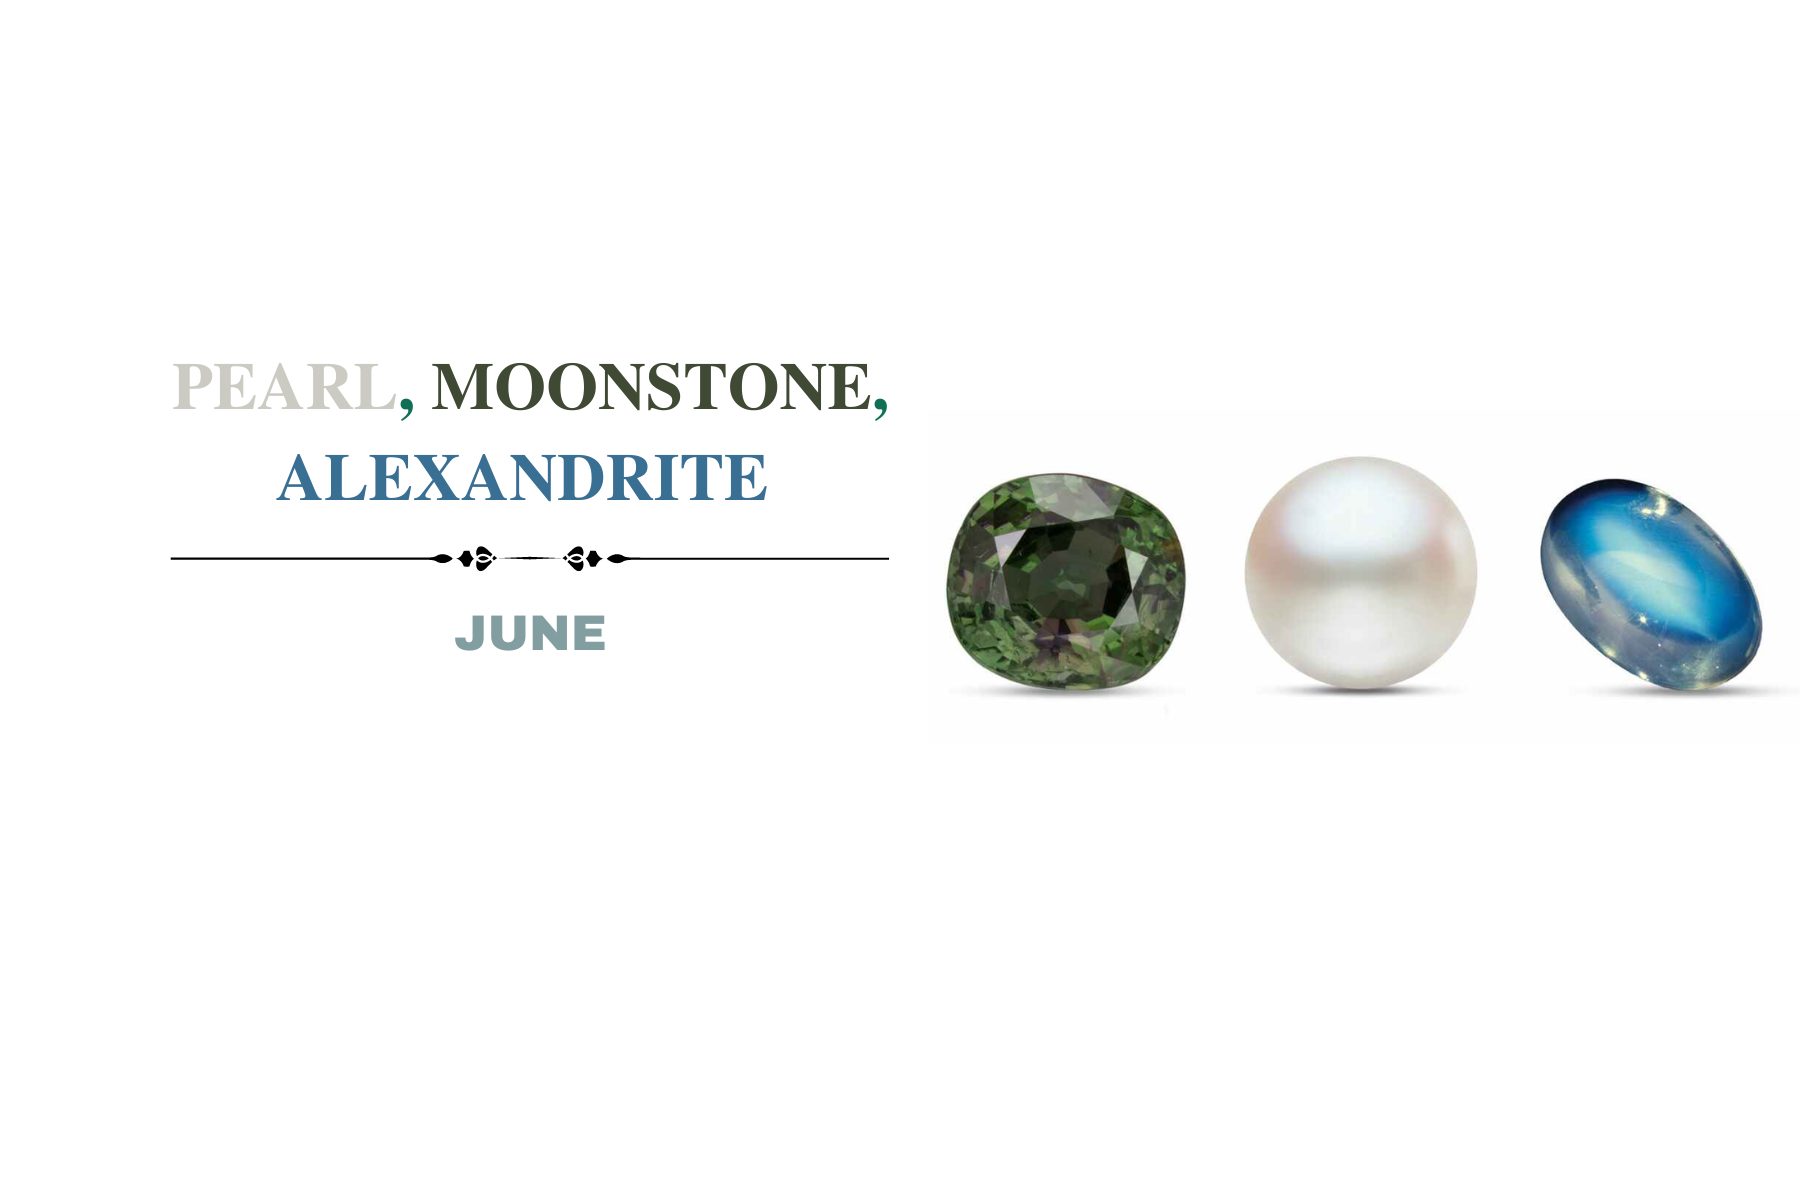 Pearl, Moonstone, and Alexandrite